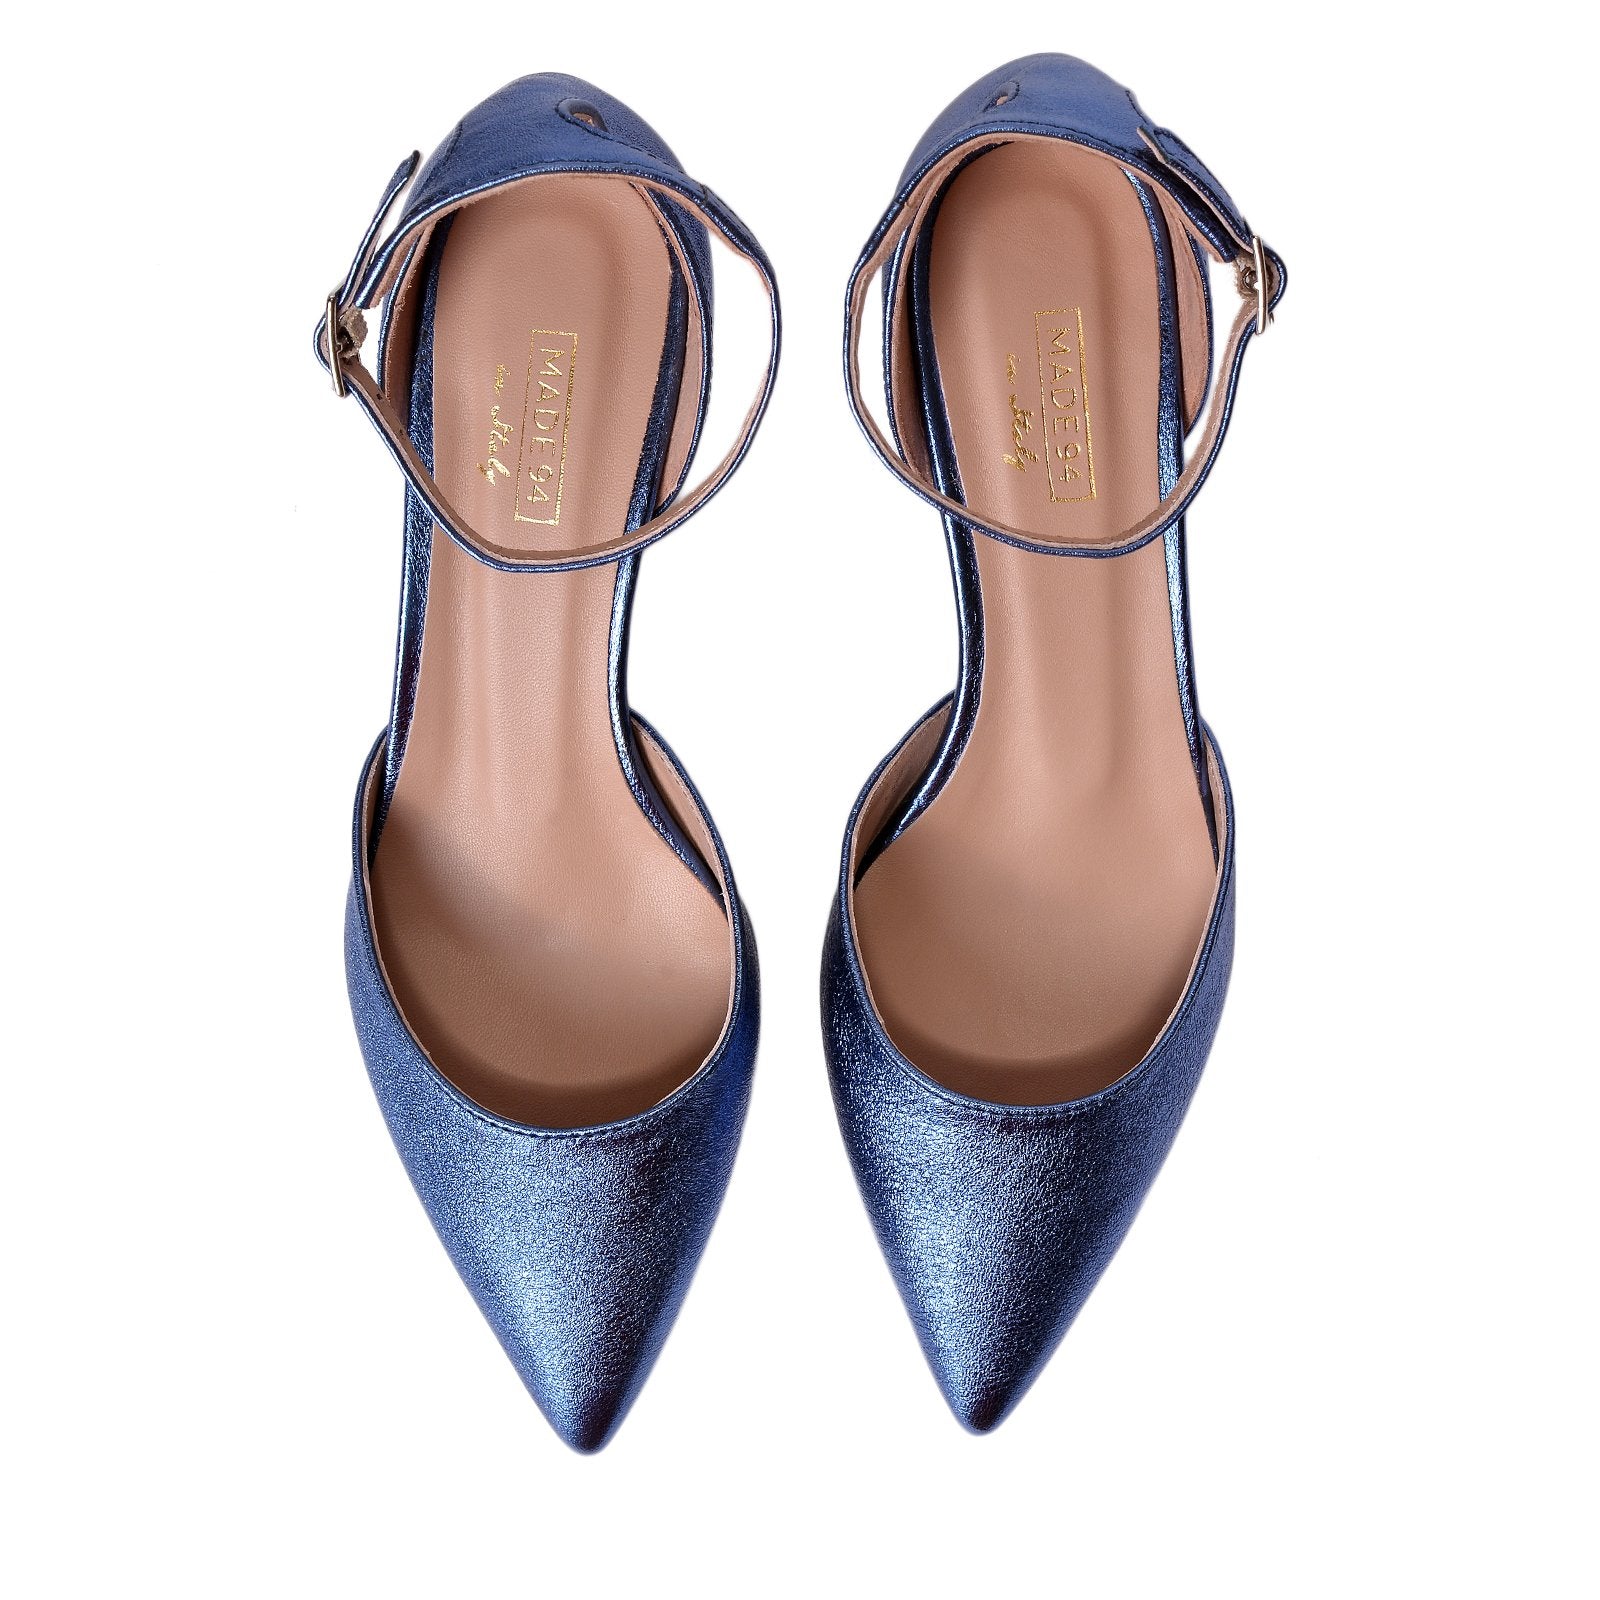 Viki Metallic Blue Leather Shoes Heels 790-008-1 - 3